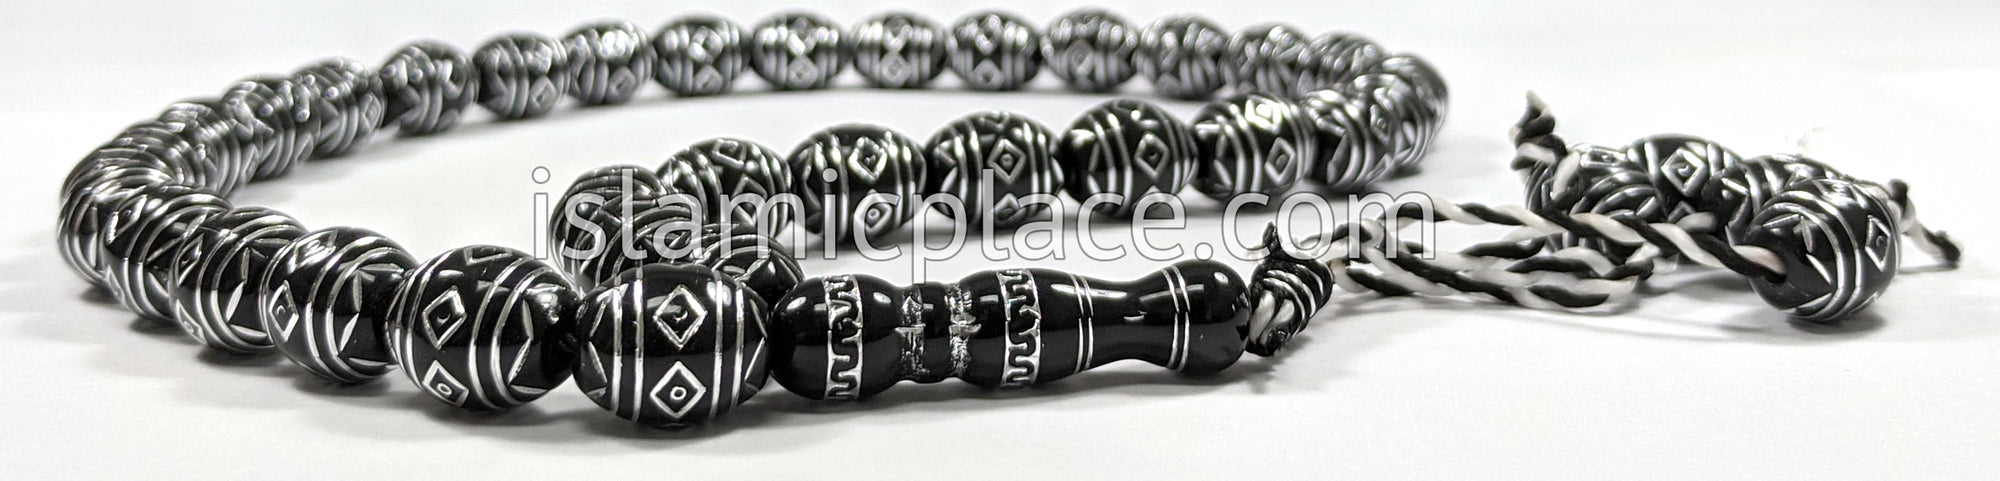 Black - Diamonds in a Row Design Tasbih with 33 Prayer Beads